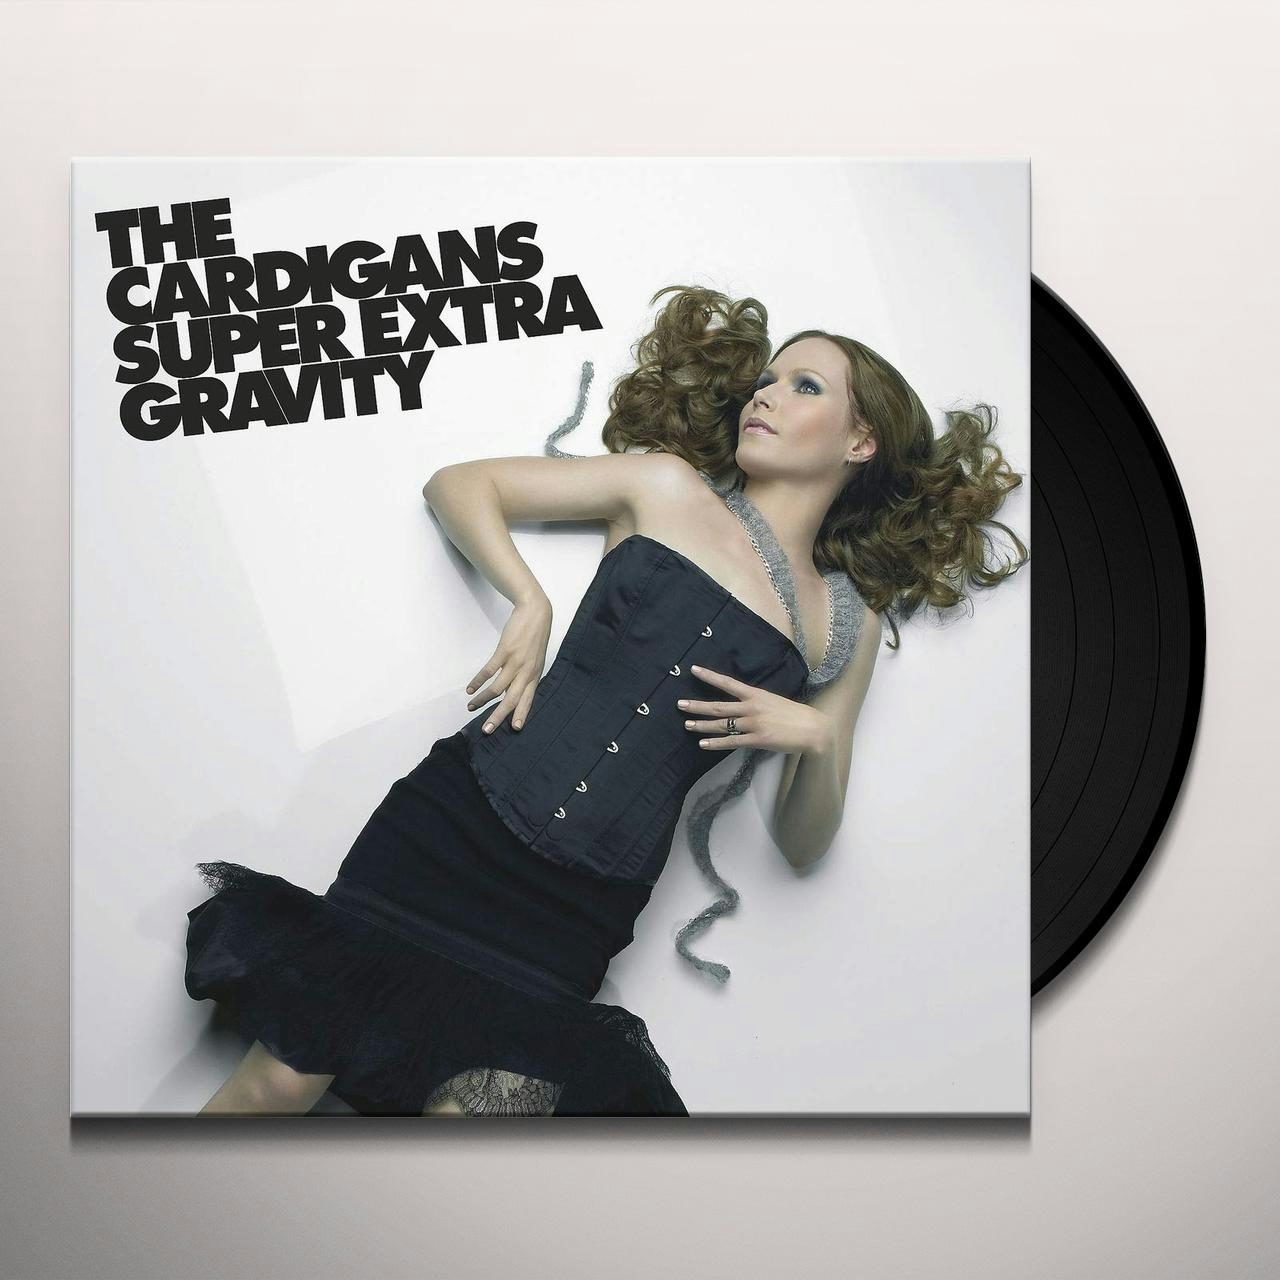 The Cardigans Super Extra Gravity Vinyl Record